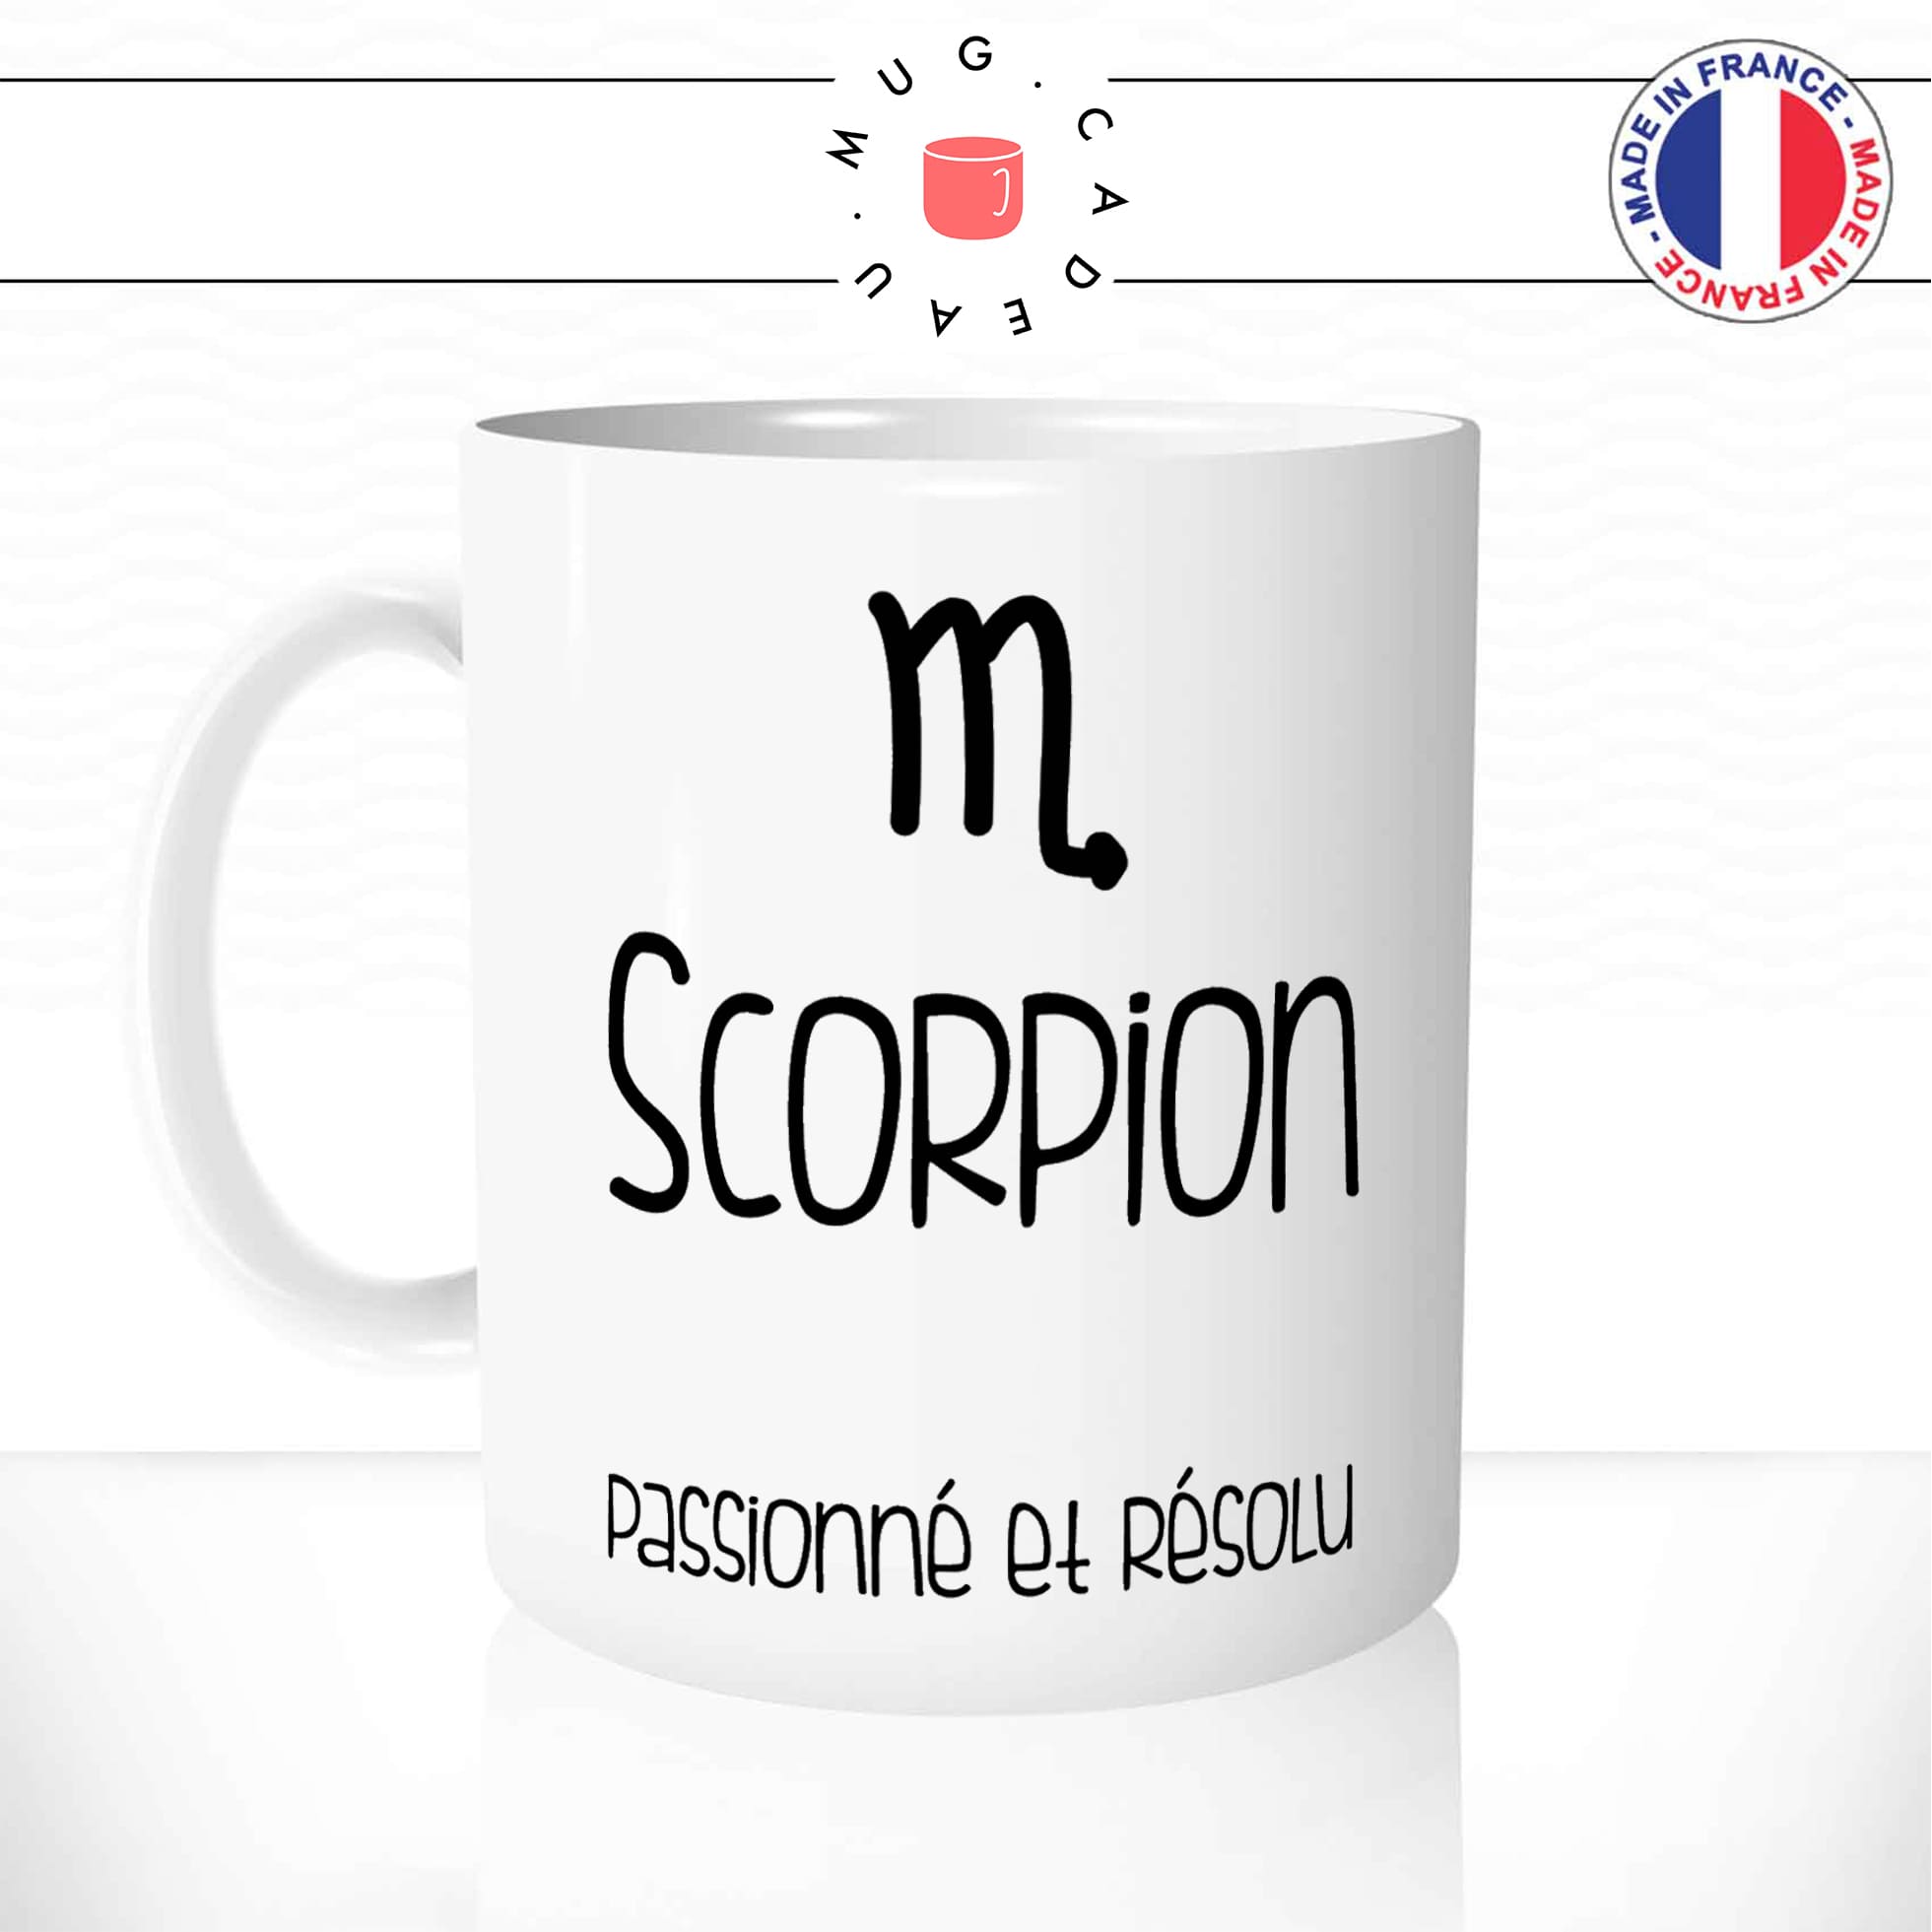 Mug Scorpion - Qualités